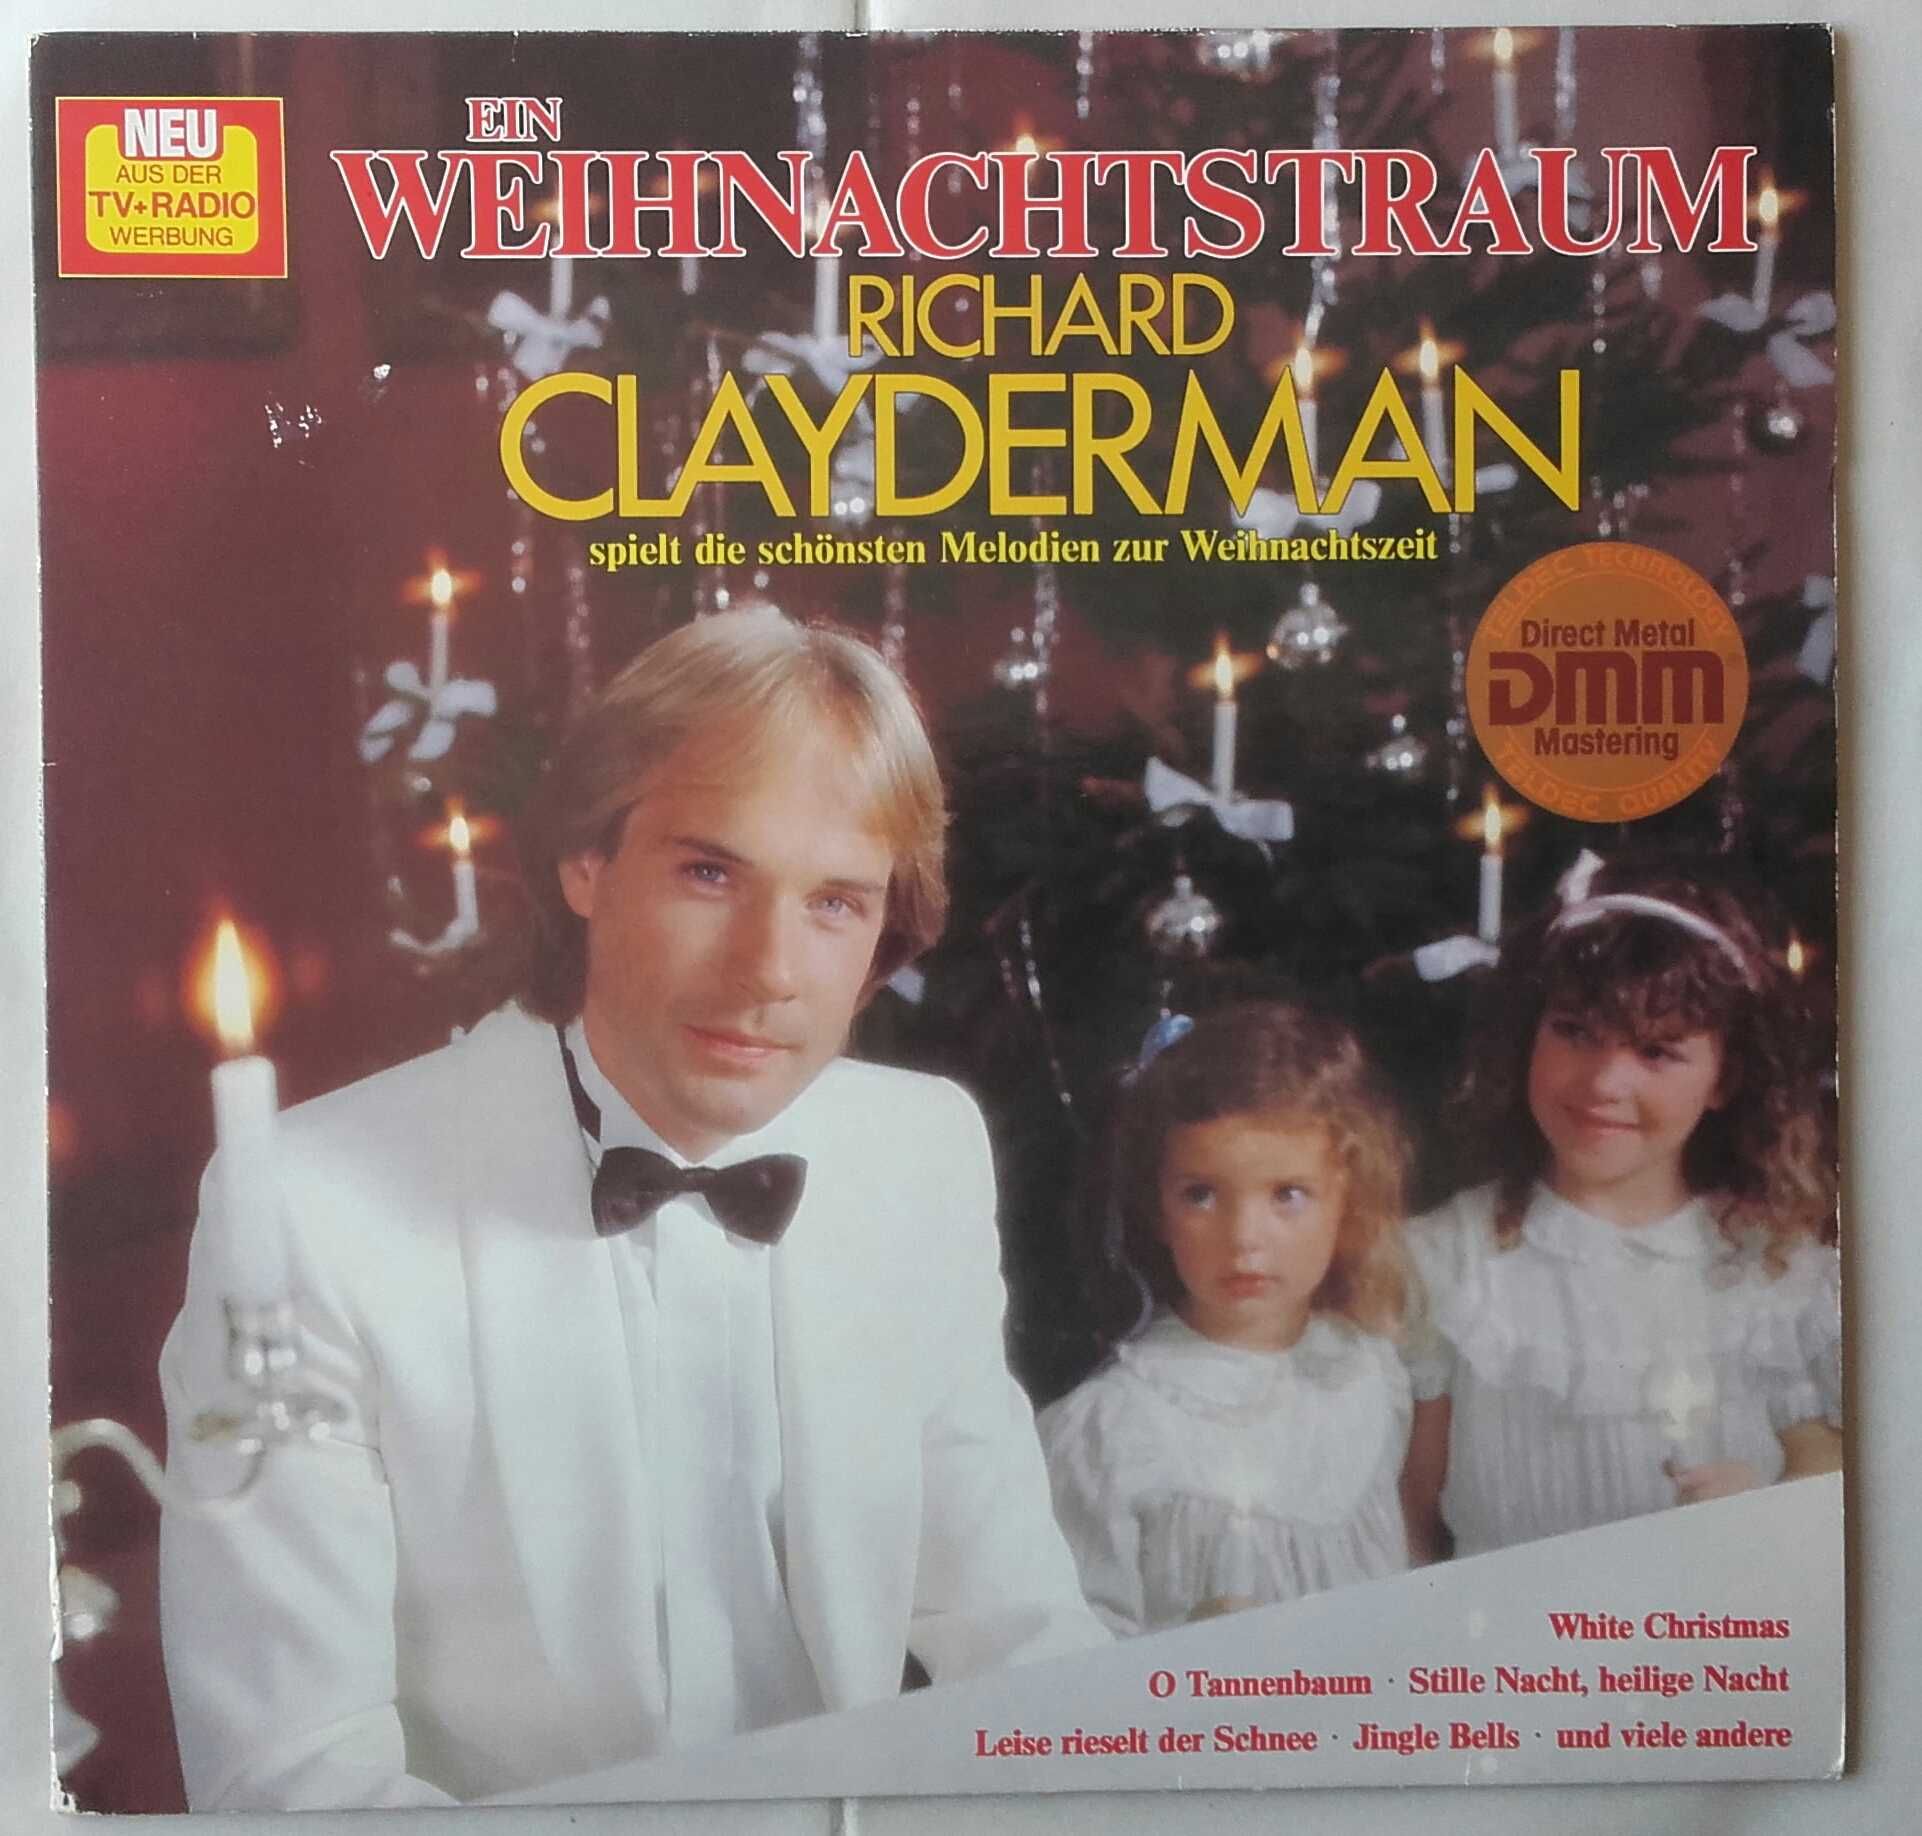 Richard Clayderman, utwory na fortepian, winyl 1982 r.